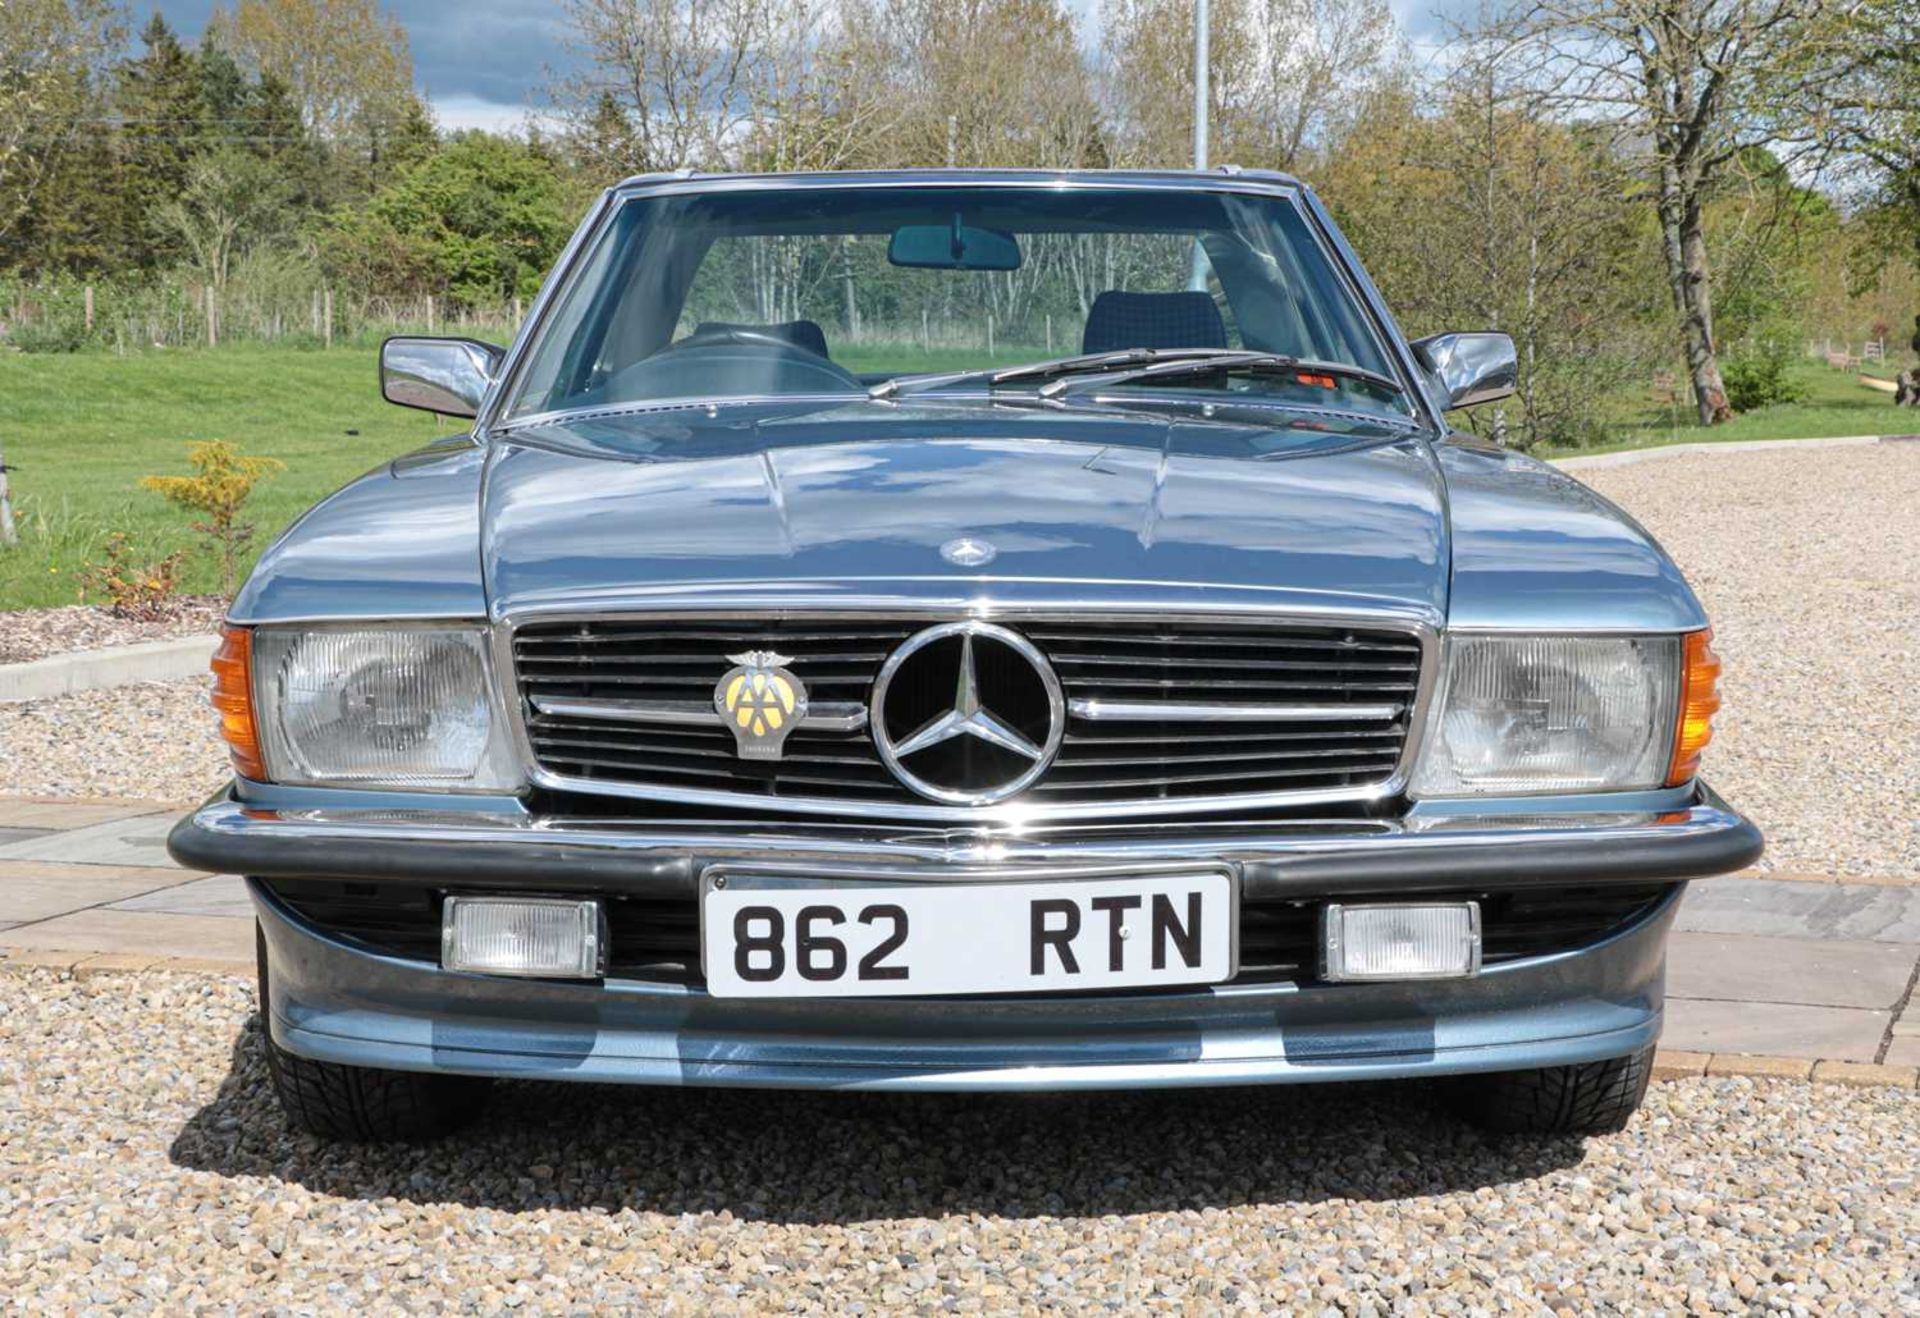 1985 Mercedes 380-SL Auto ConvertibleRegistration number: 862 RTNDate of first registration: 03 01 - Bild 2 aus 5